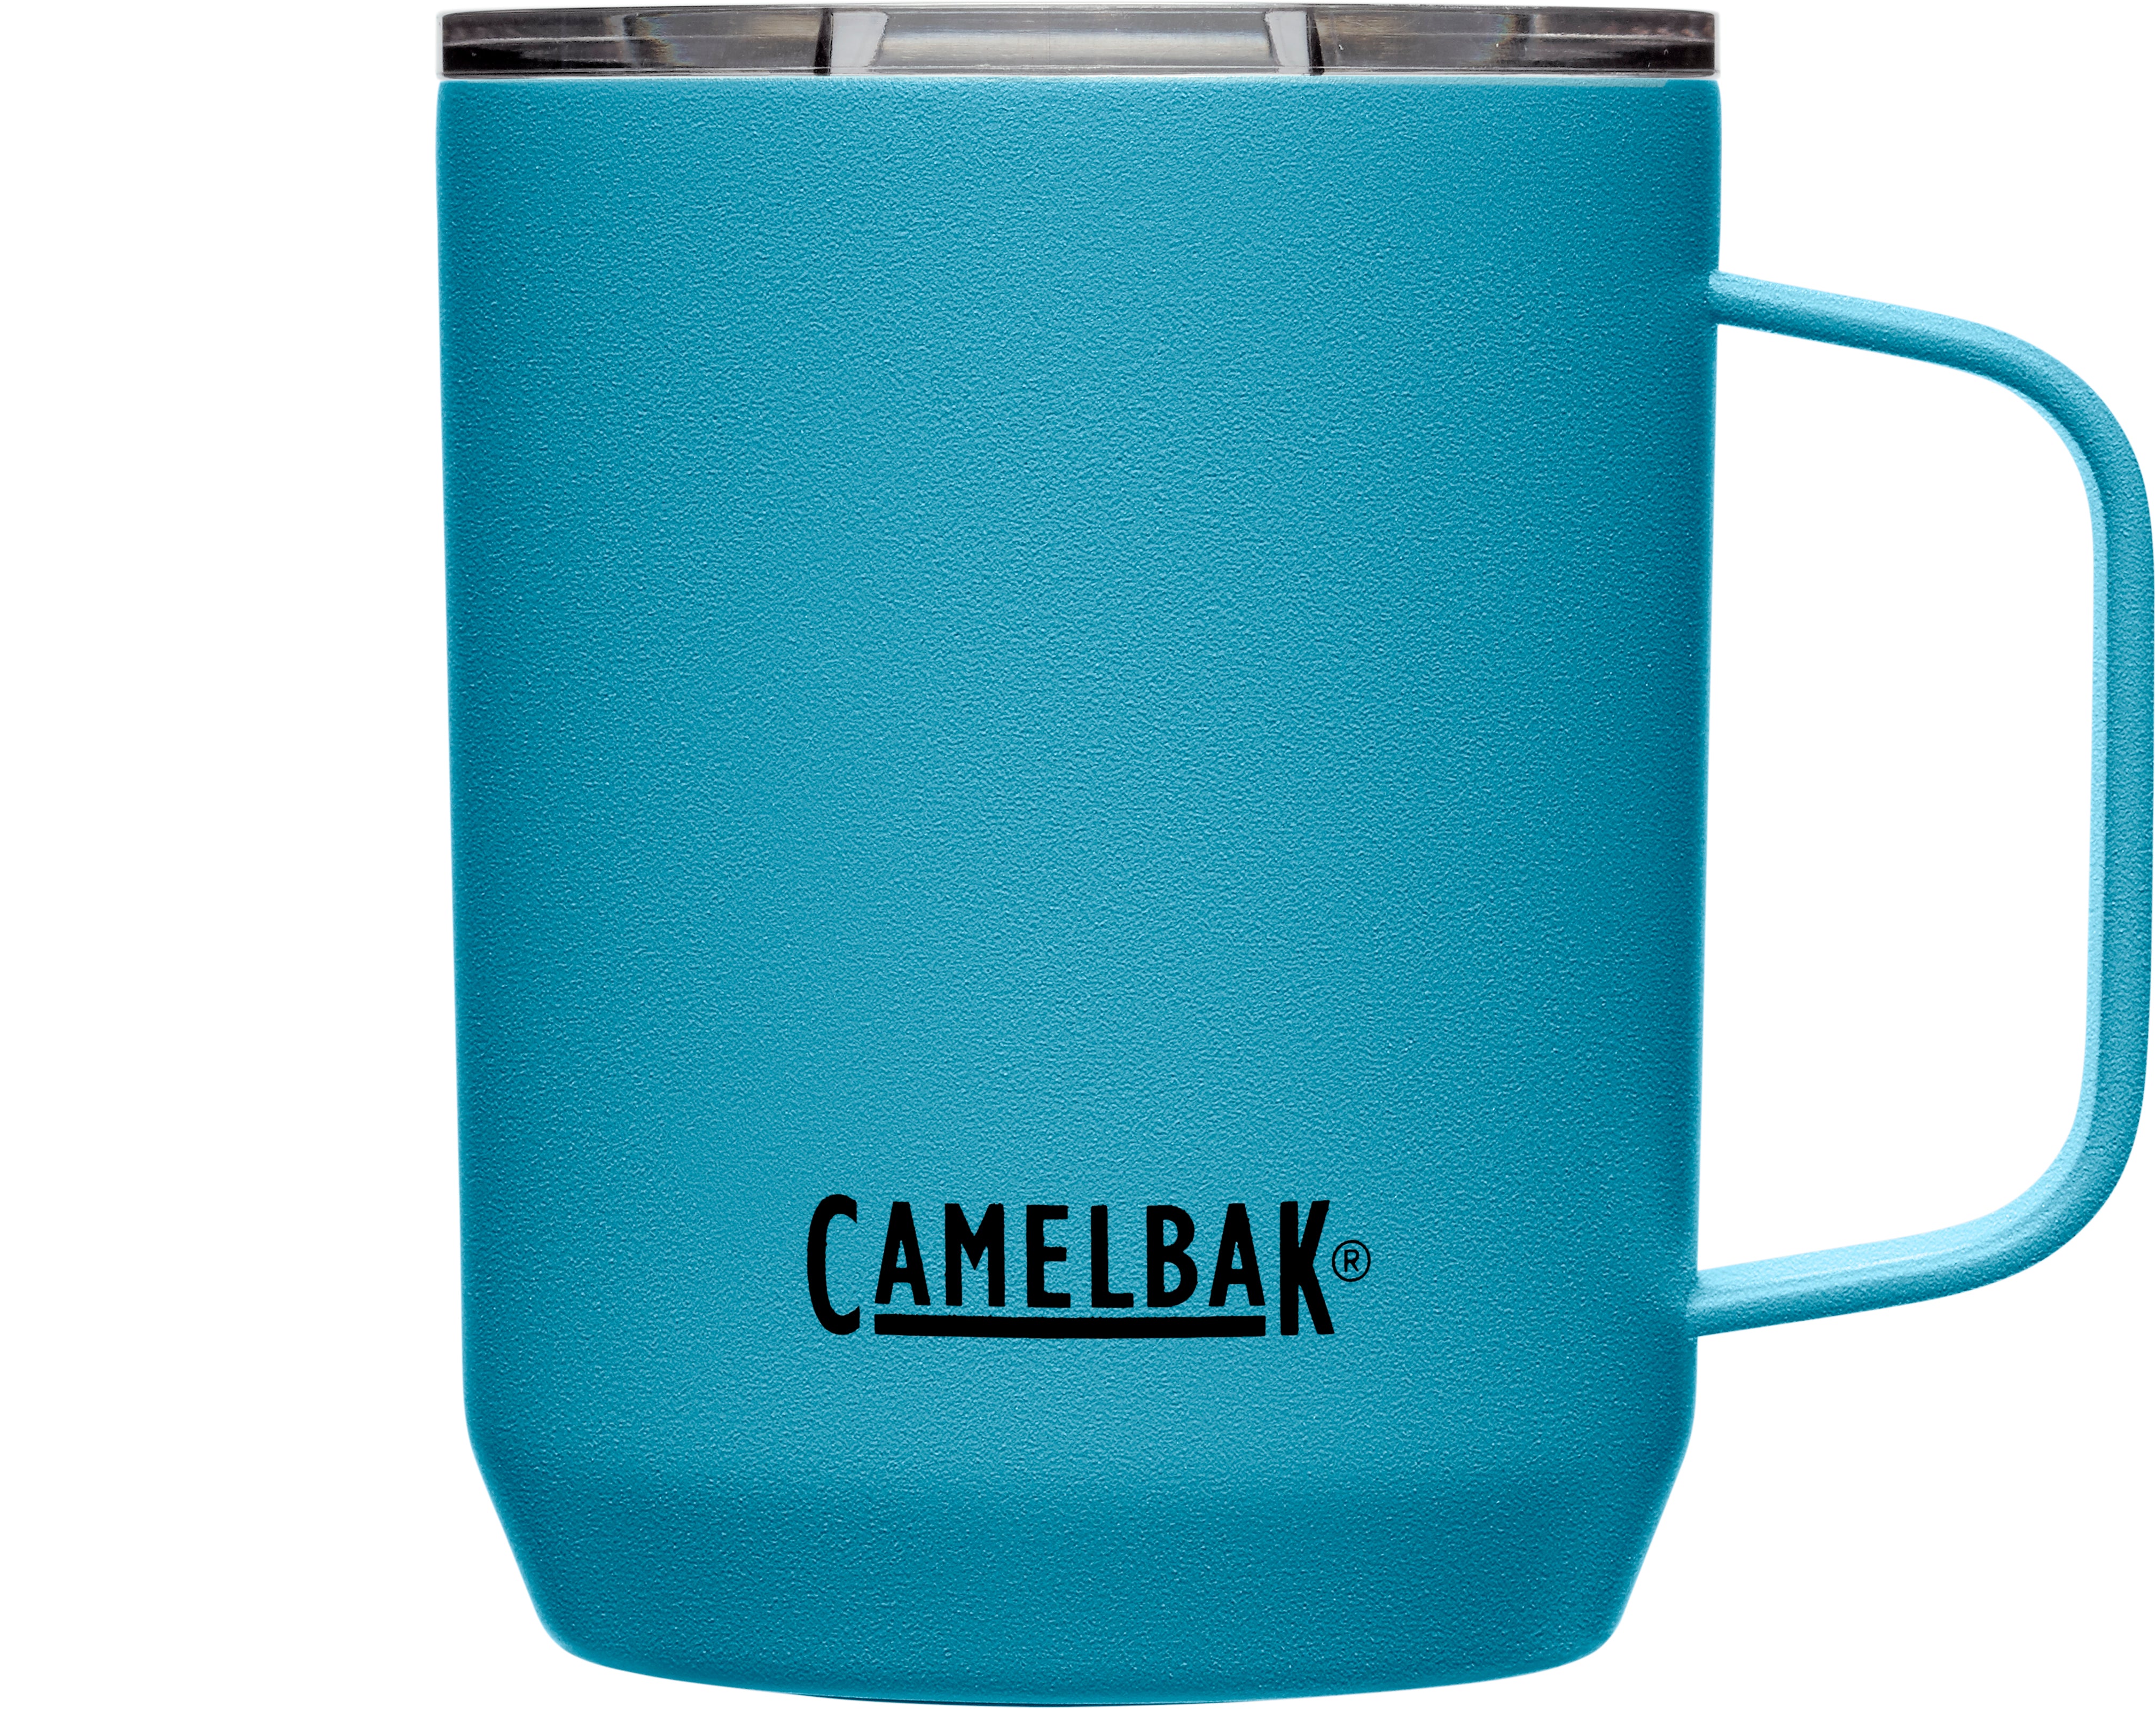 Camelbak Camp Mug - Coastal, 12 oz - Kroger